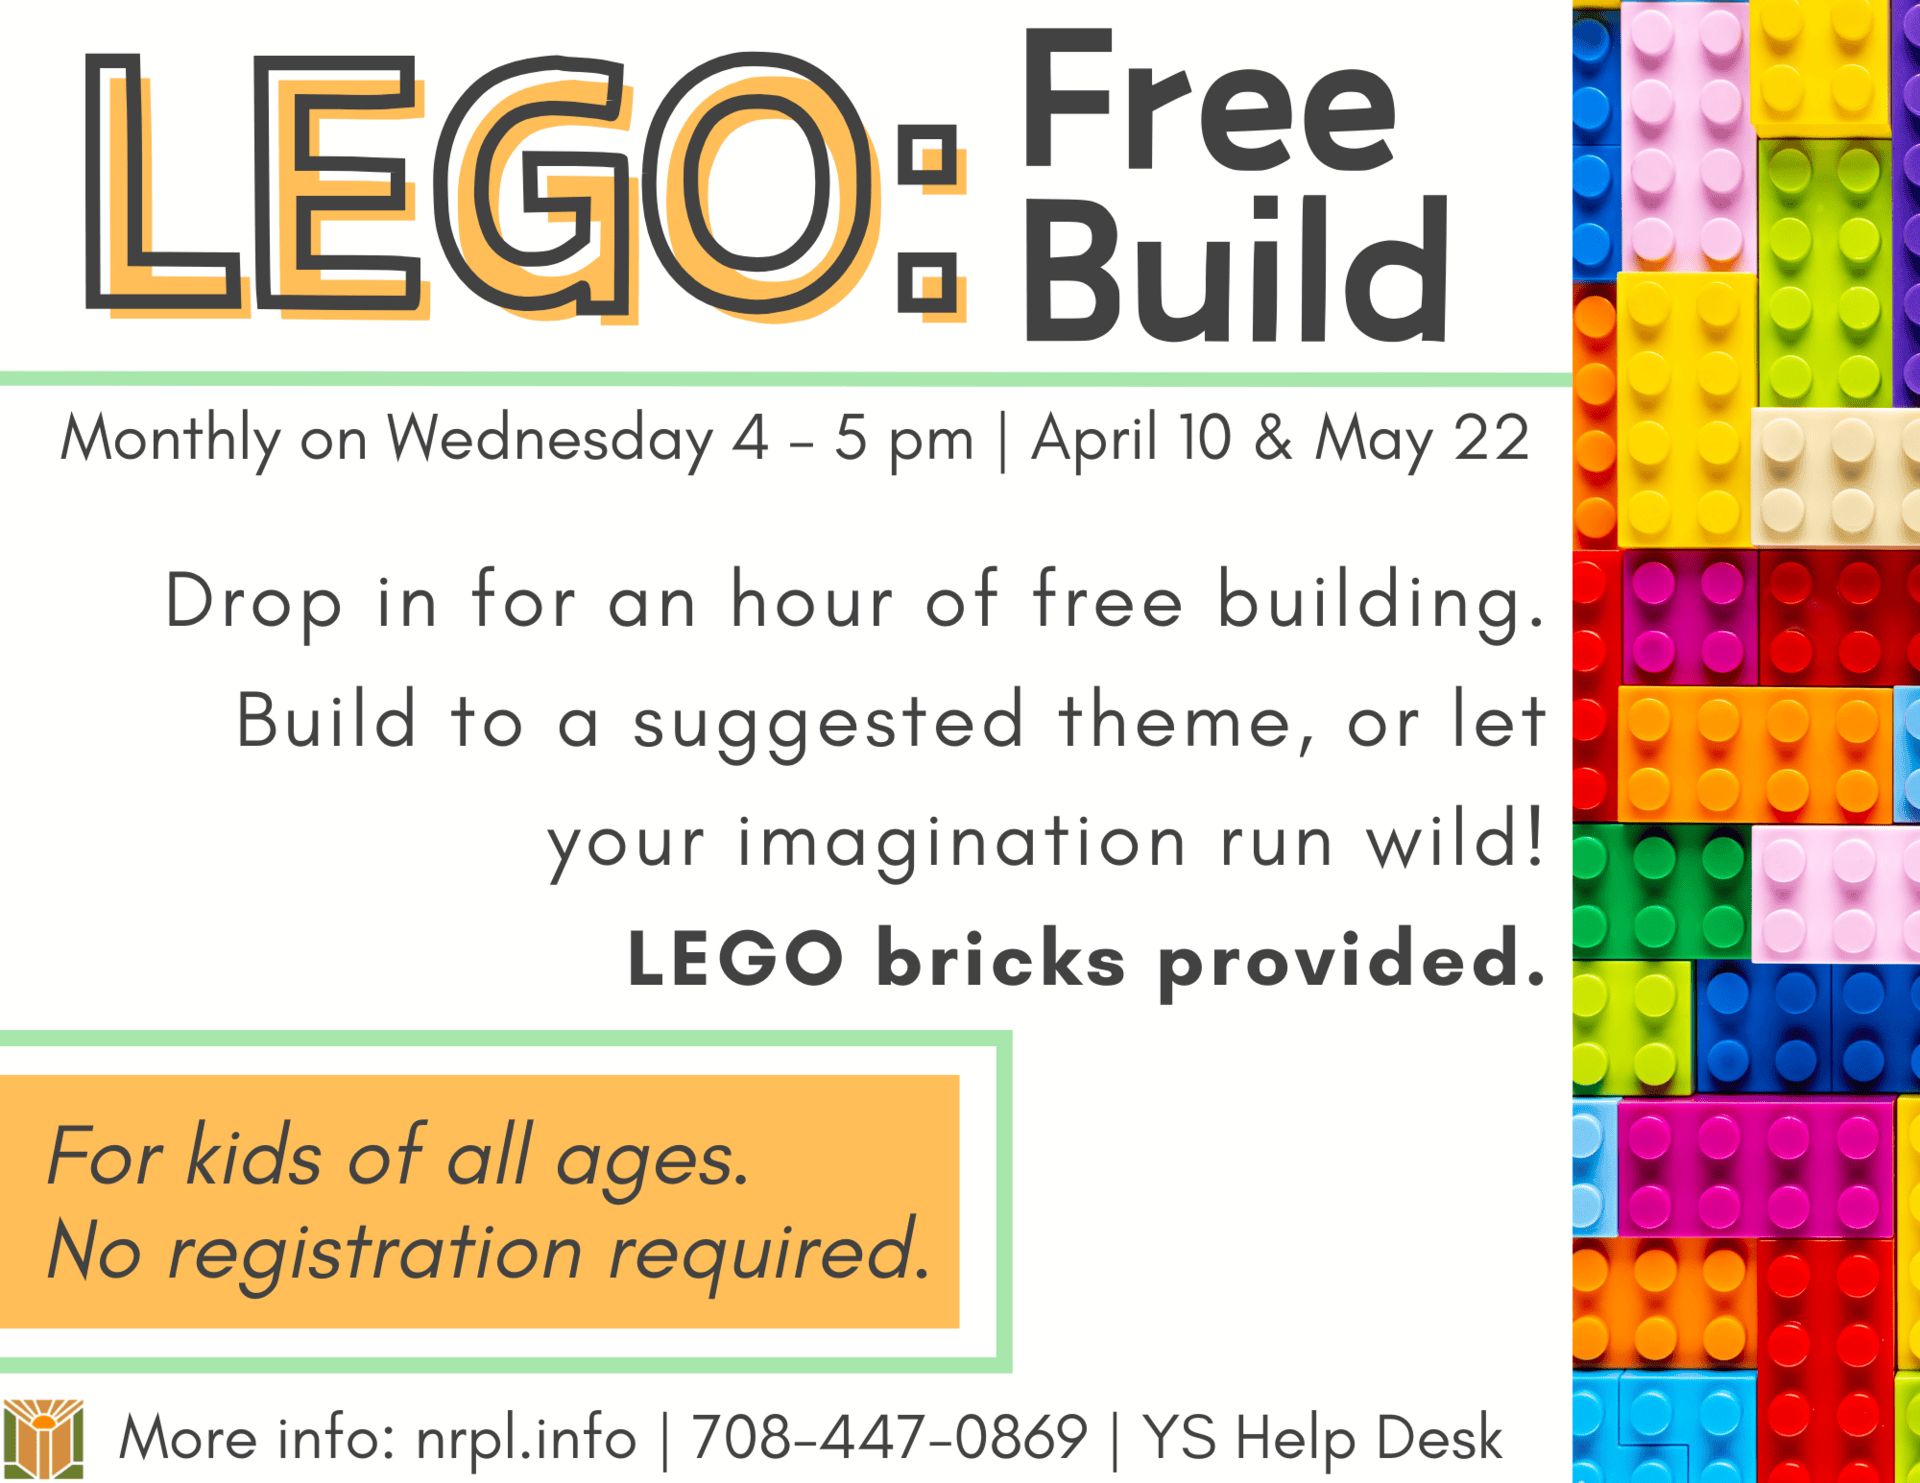 Lego Free Build program flyer